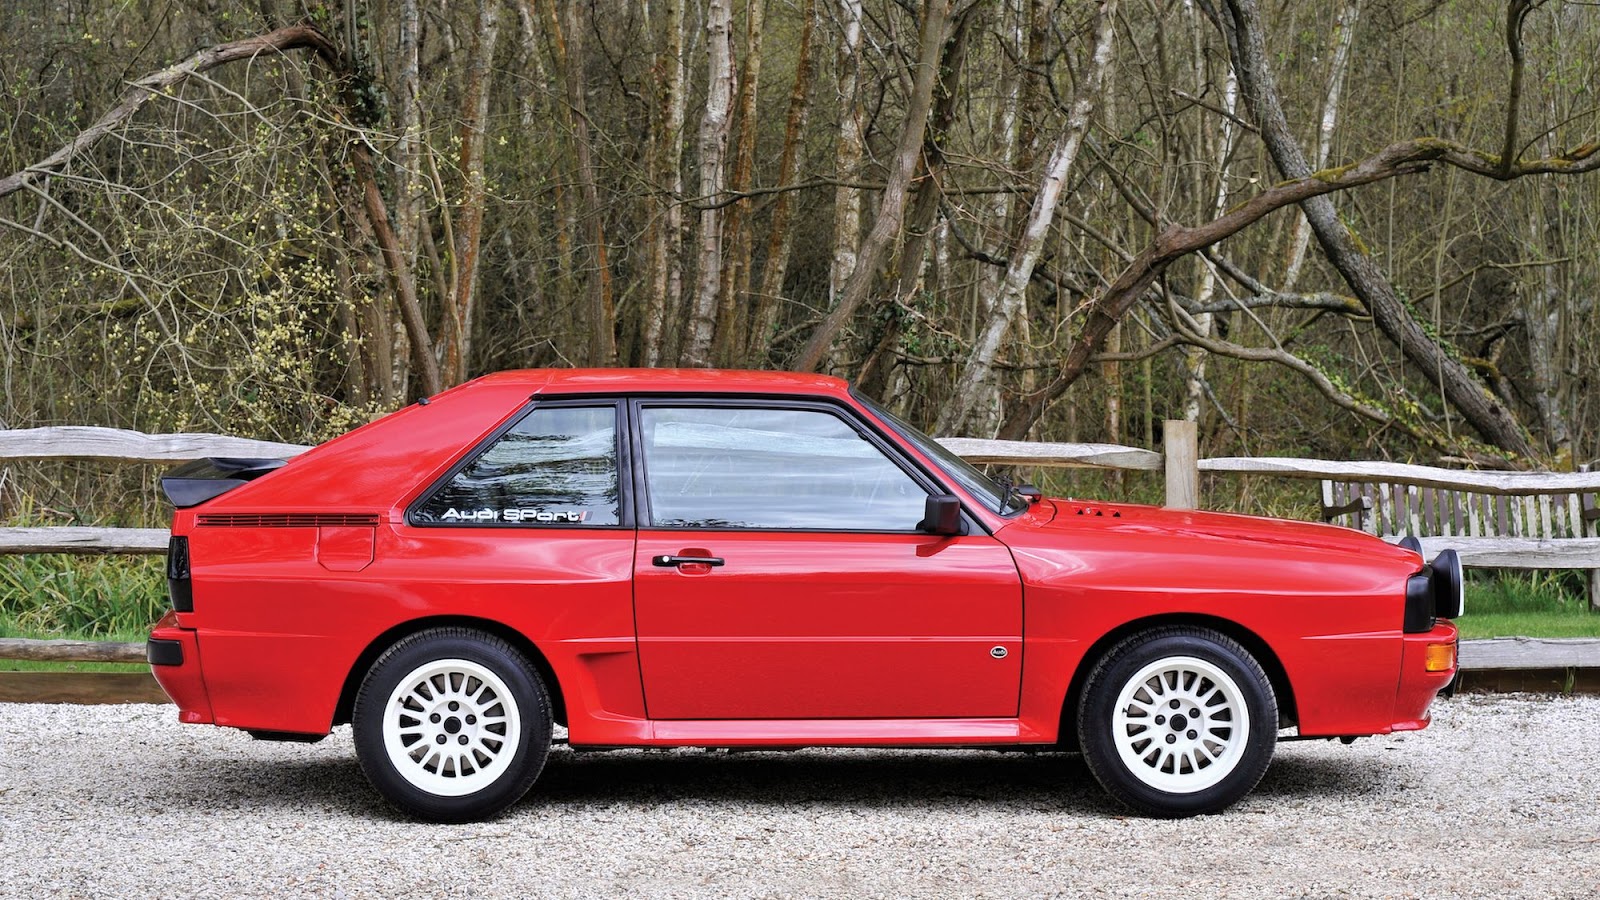 Stunning 1986 Audi Sport Quattro Sells For $536,000 At 